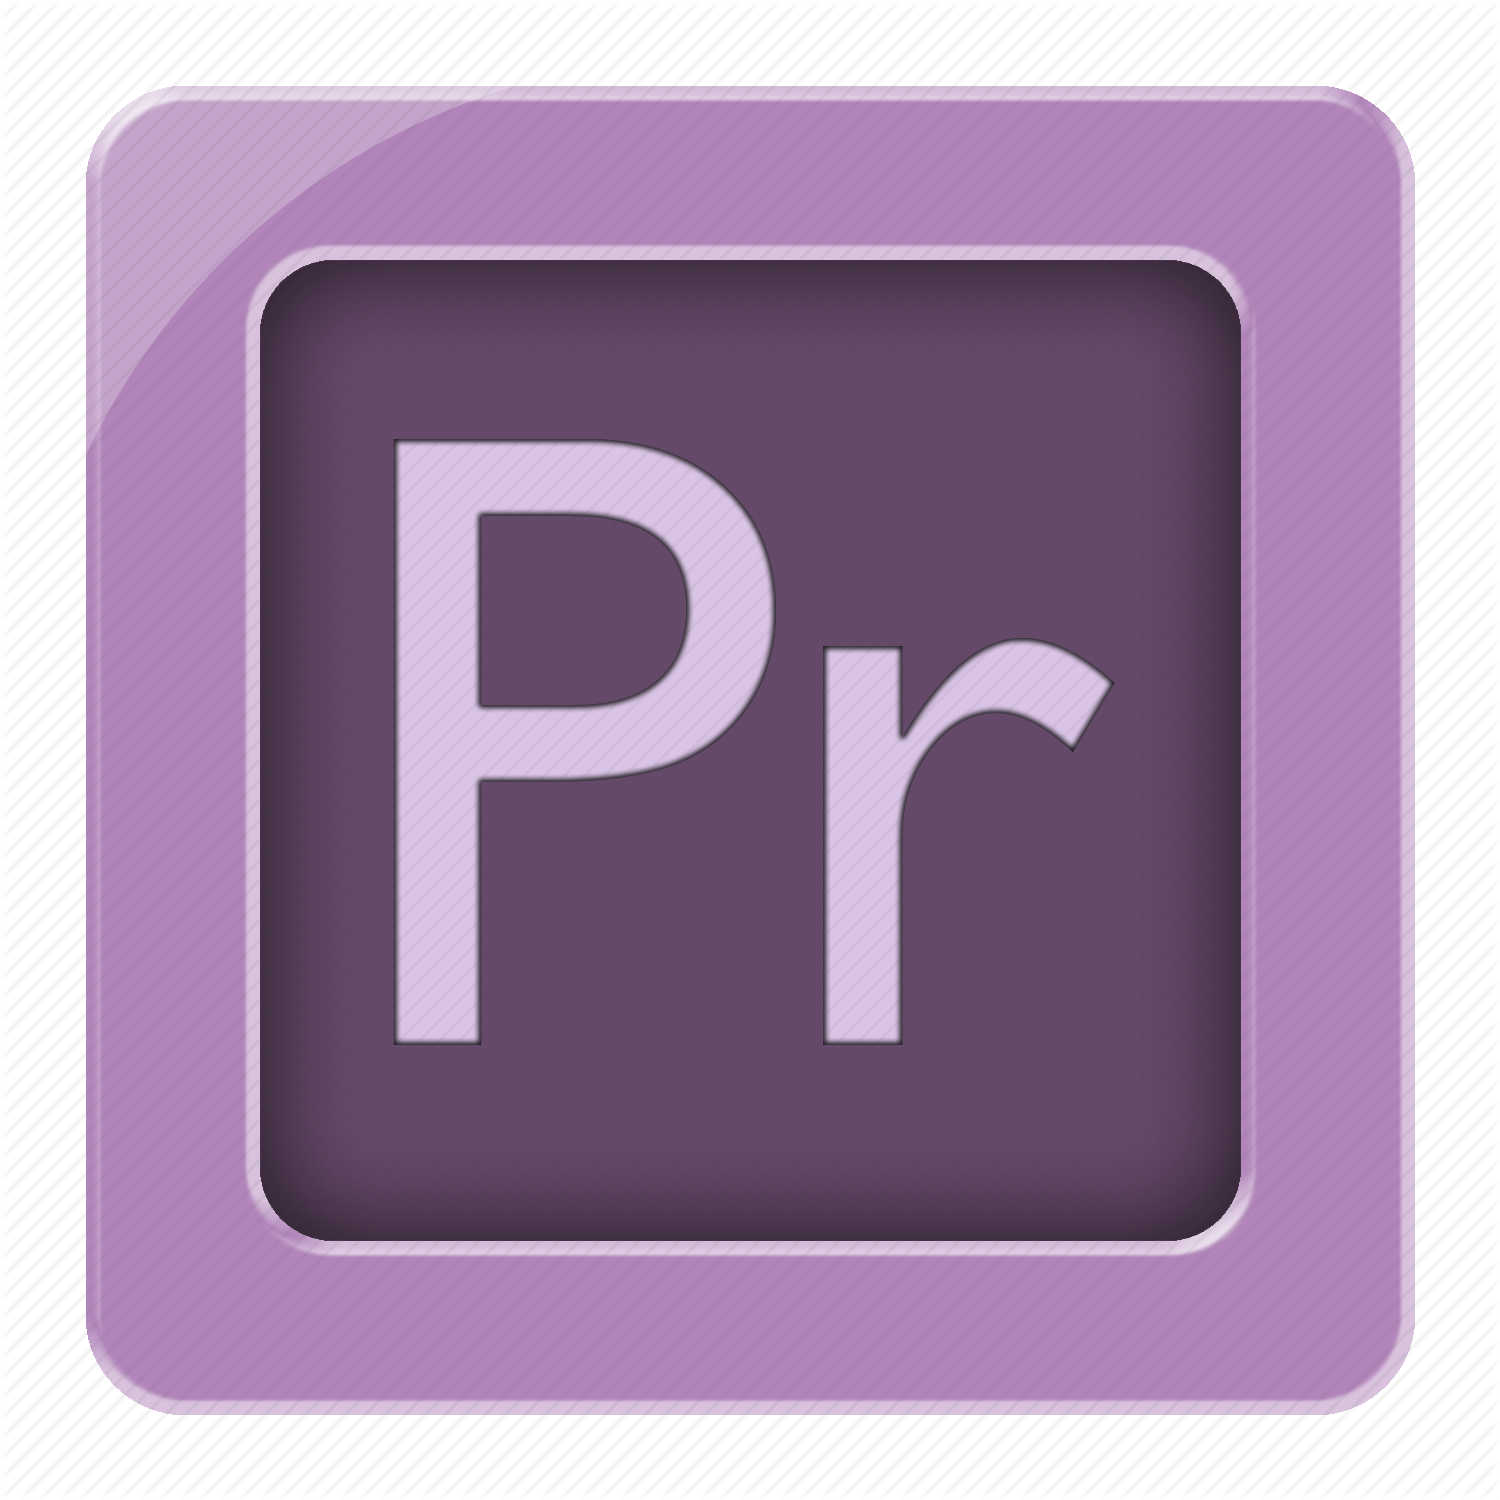 Violet,Purple,Font,Text,Icon,Material property,Square,Logo,Rectangle,Clip art,Illustration